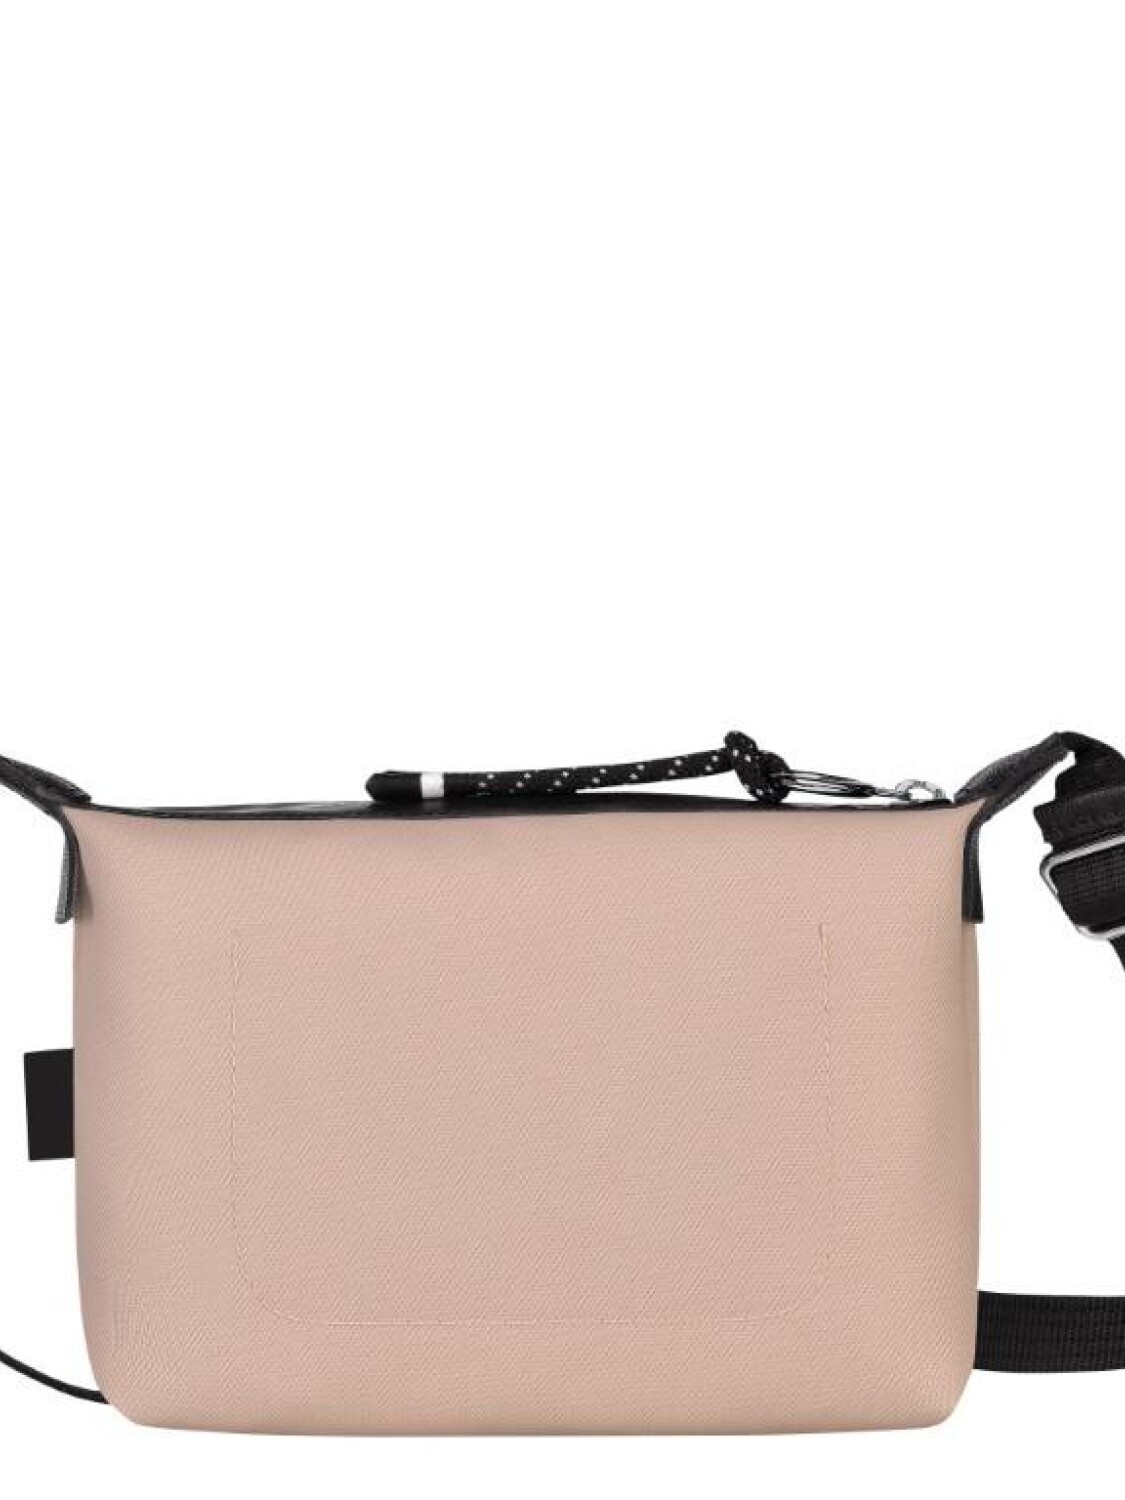 Longchamp -Cartera de material textil, Le pliage Energy Rosado